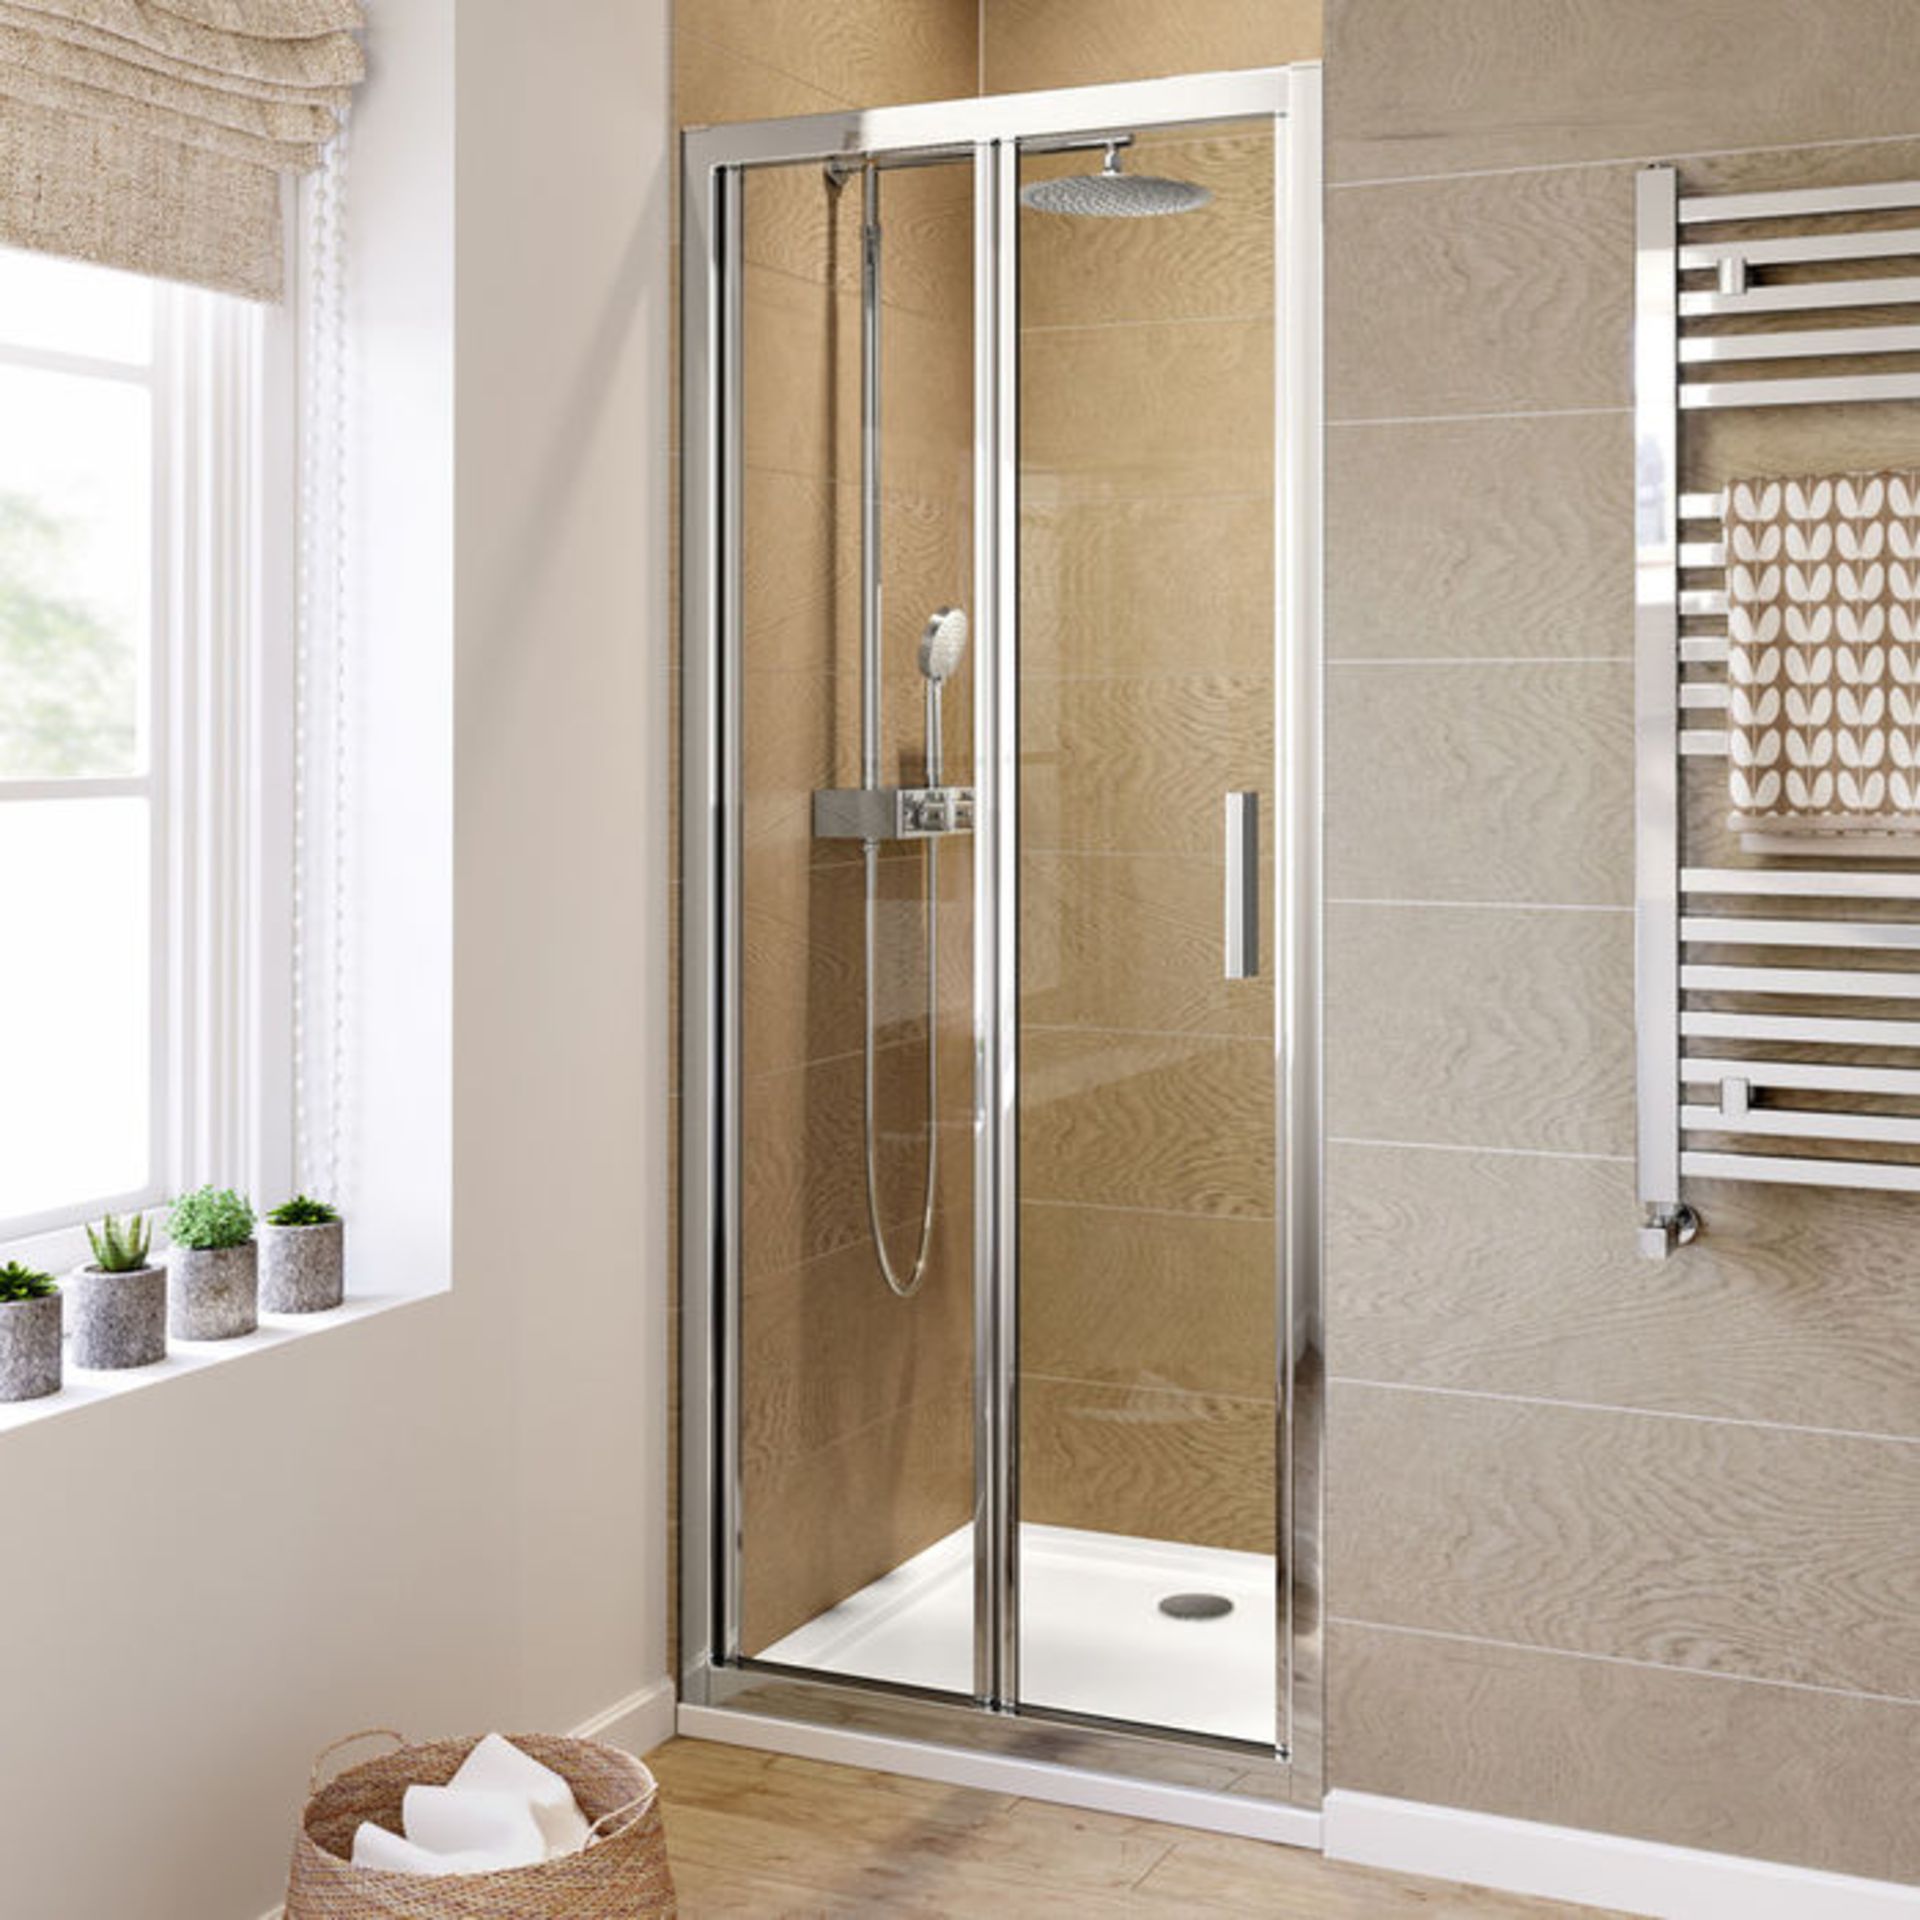 (ZL64) Elements EasyClean Bifold Shower Door - 900mm - 6mm. RRP £299.99. We love this because Bi- - Image 2 of 4